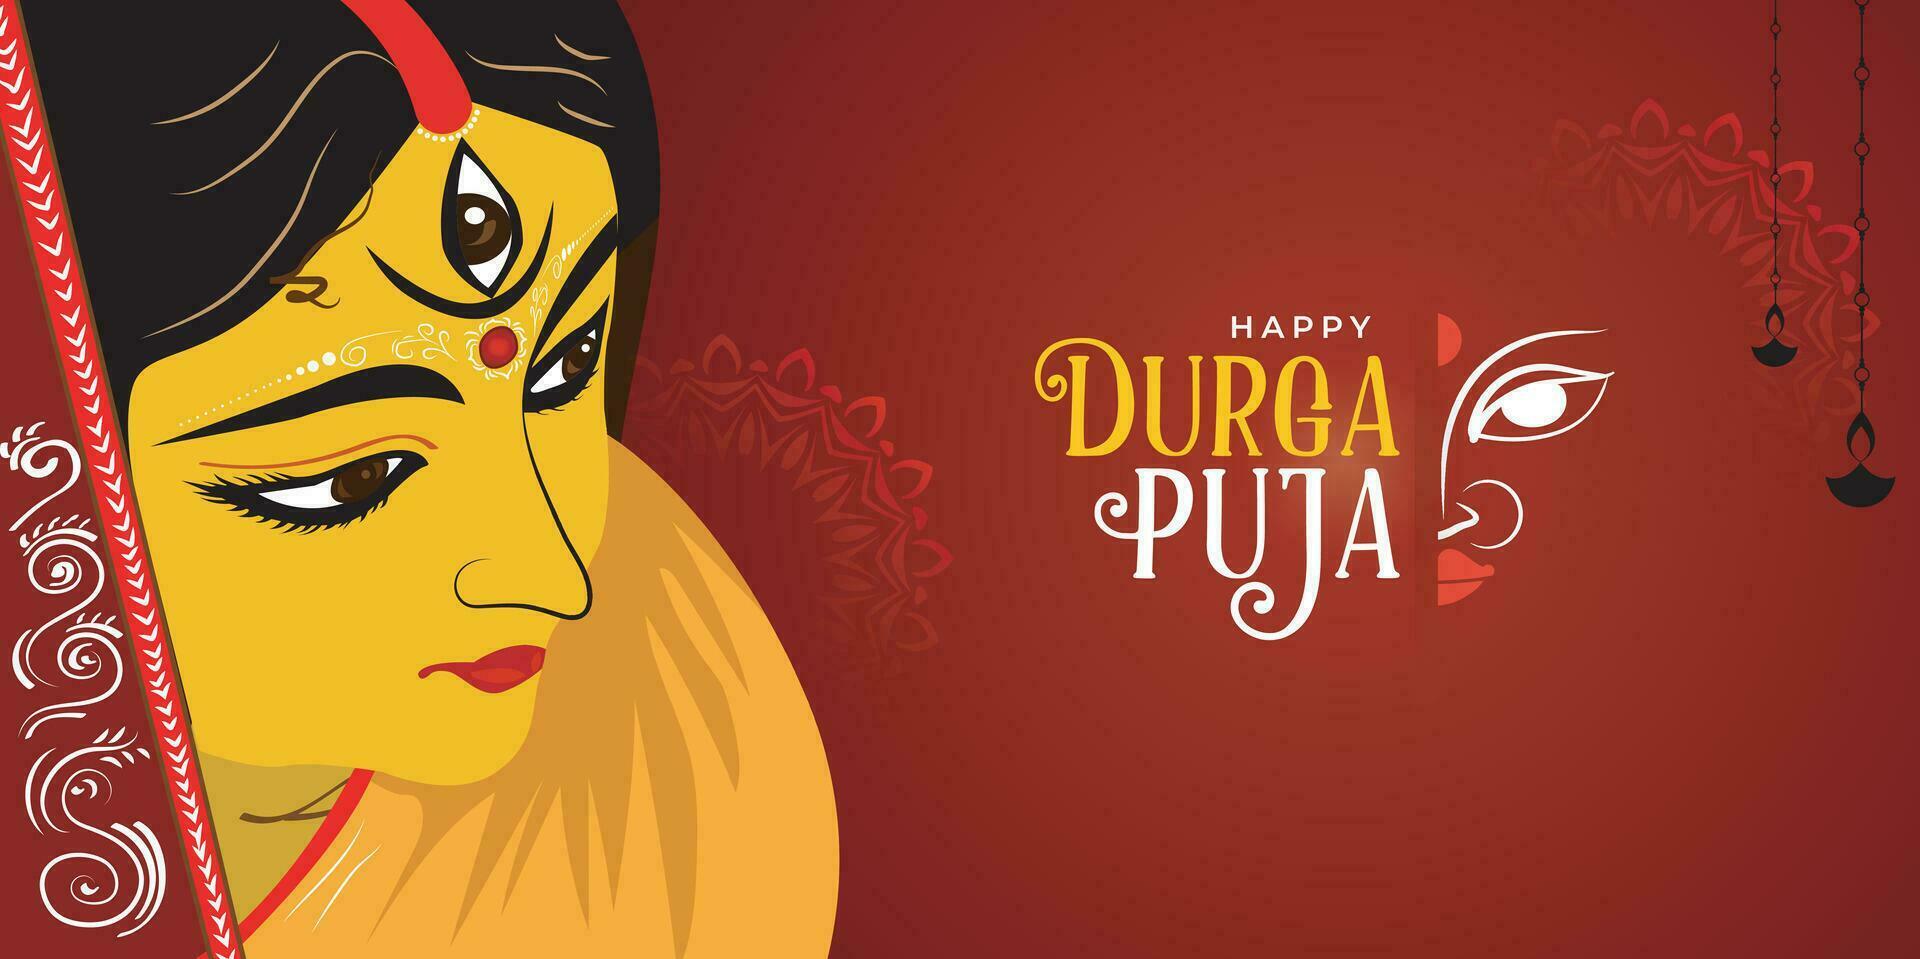 vrij vector cultureel gelukkig durga puja festival subh navratri achtergrond